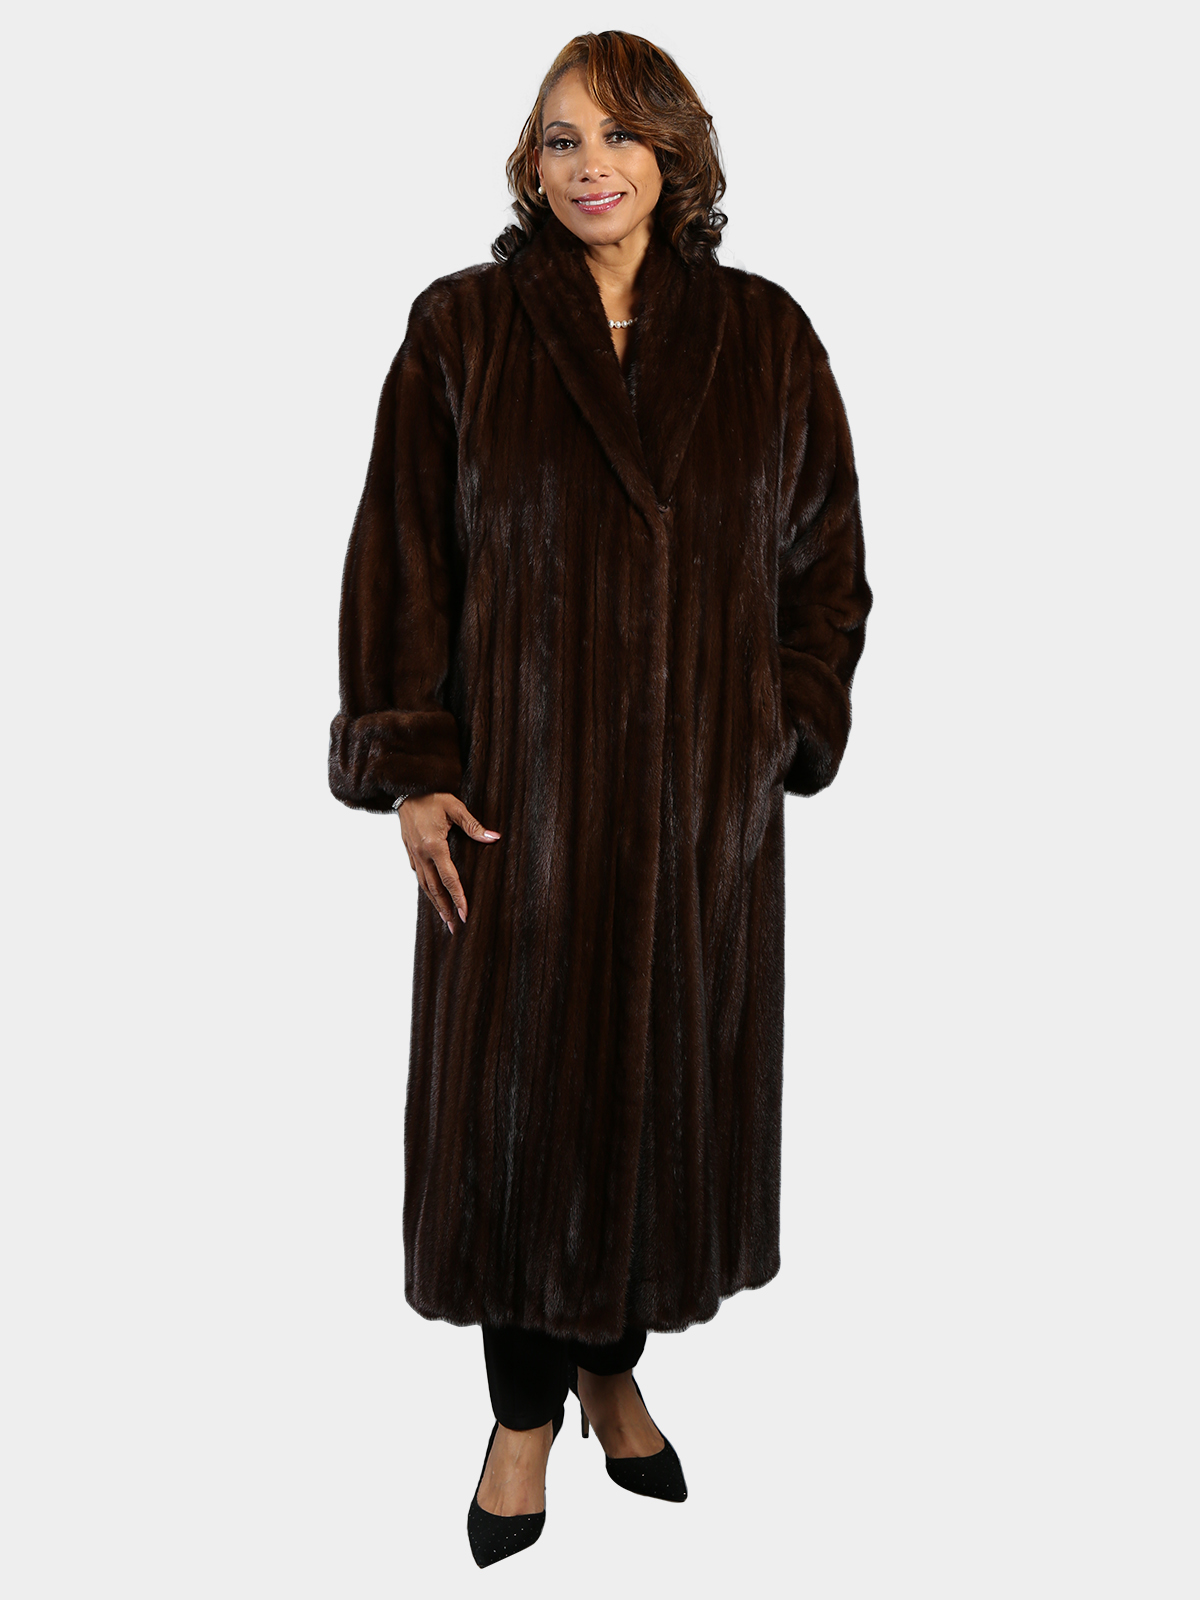 Woman's Neiman Marcus Mahogany Female Mink Fur Coat